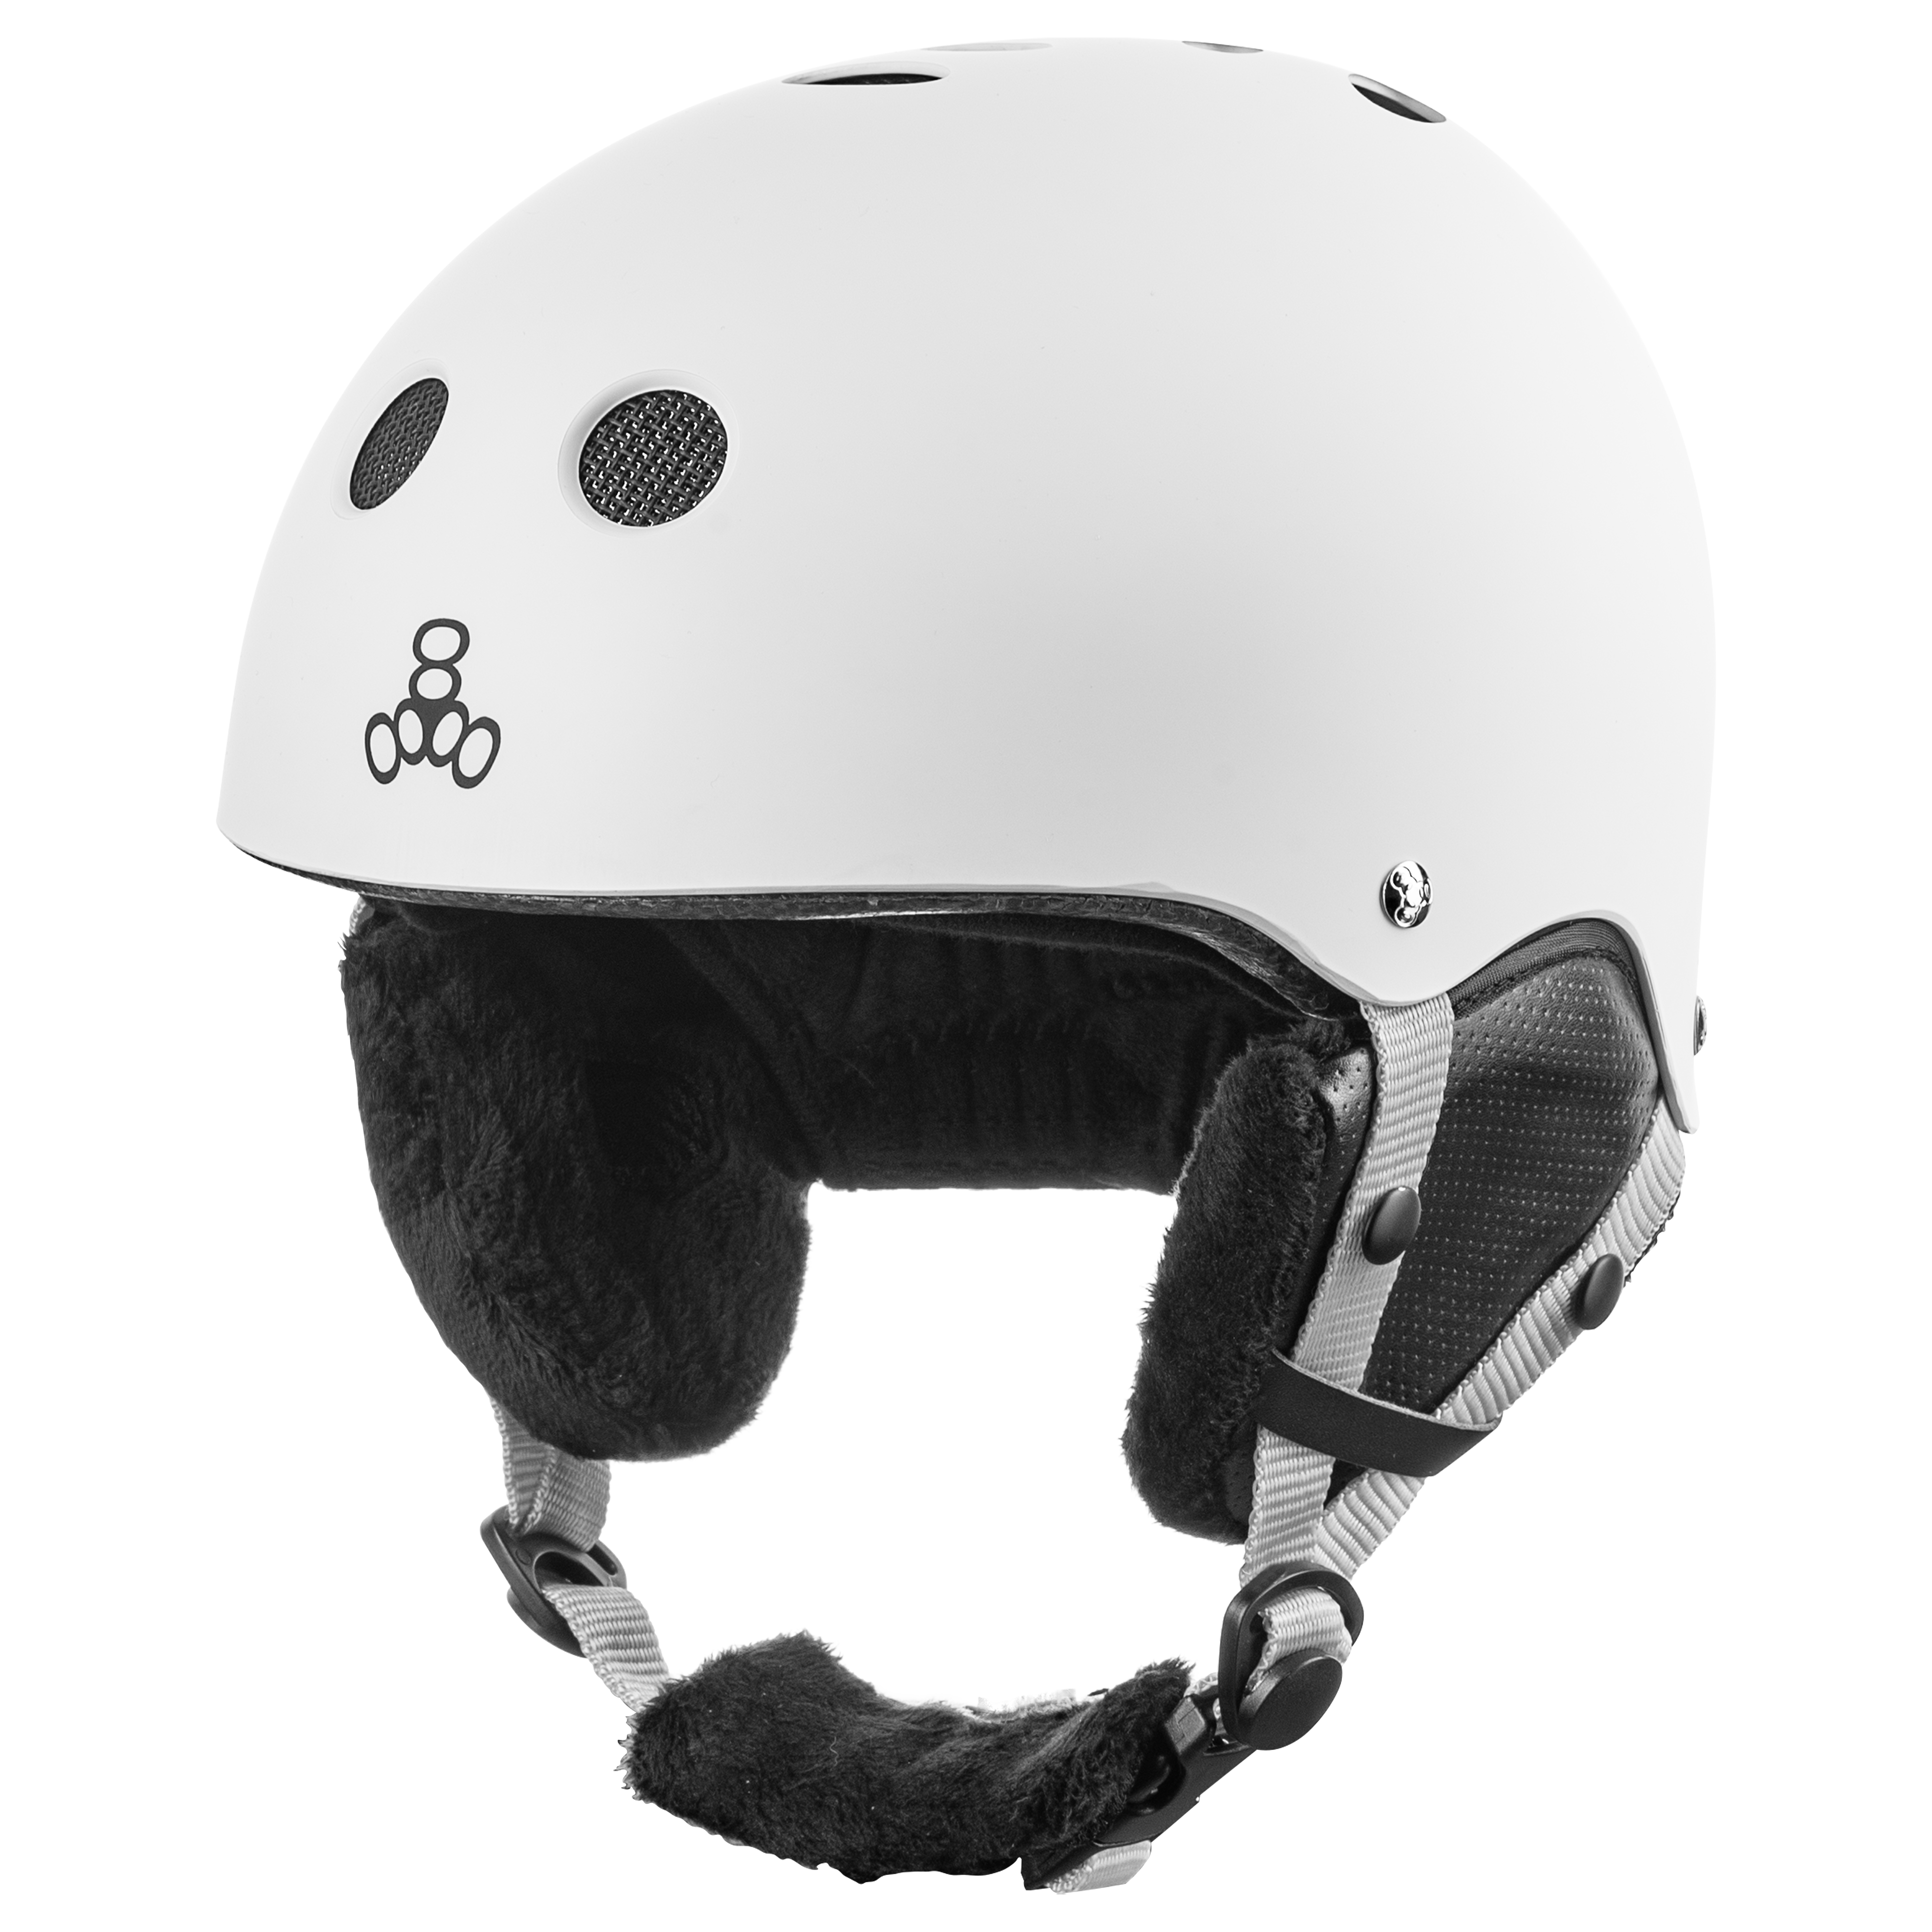 Характеристики мужской шлем для сноуборда Triple8 Halo Snow Standart White Rubber (S/M)